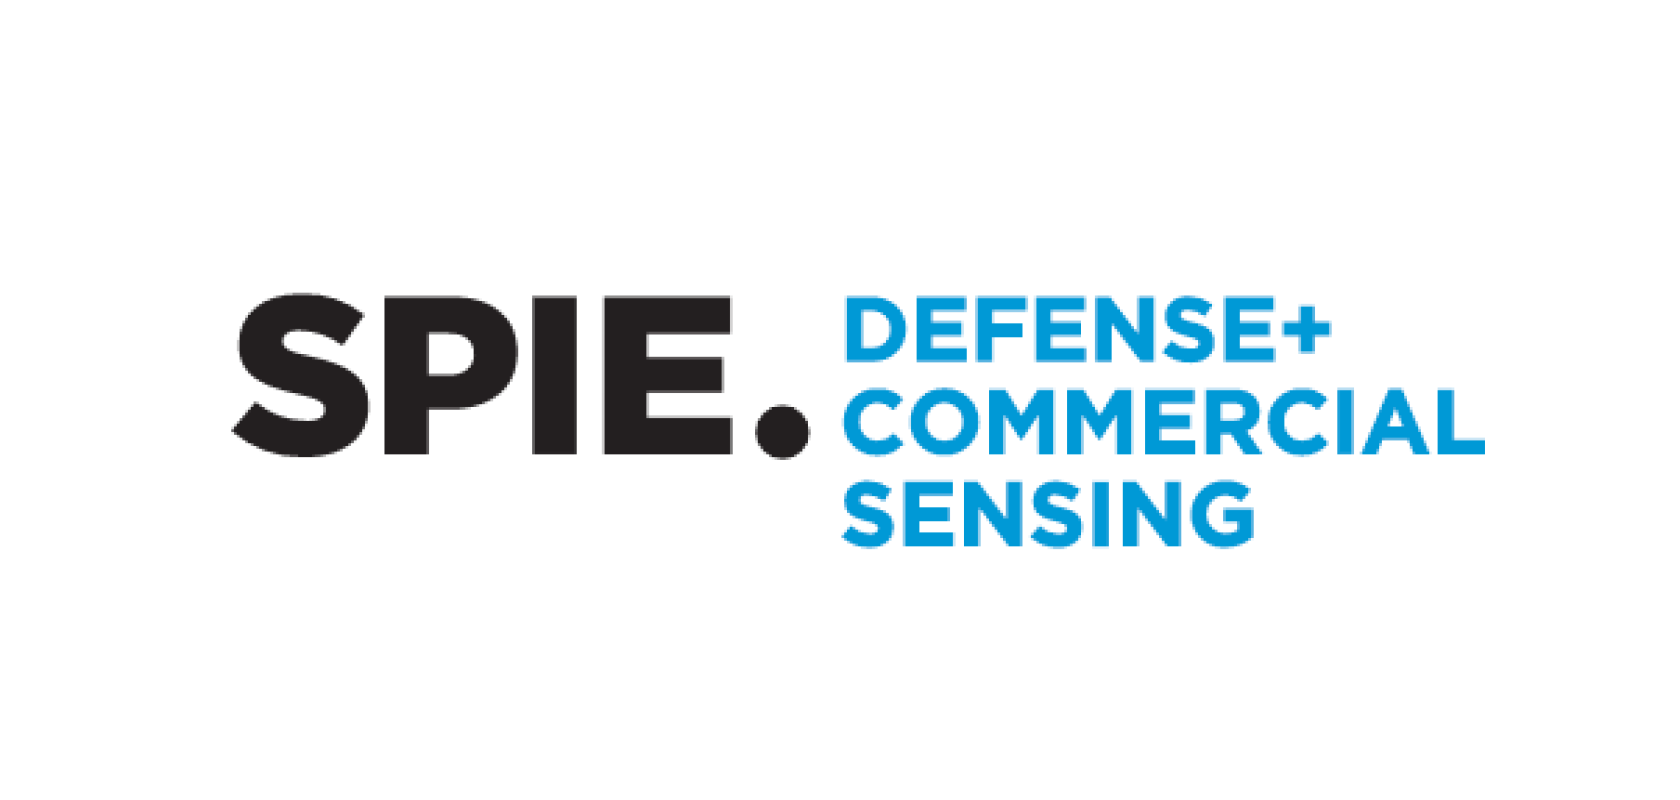 SPIE Commercial Defence & Sensing